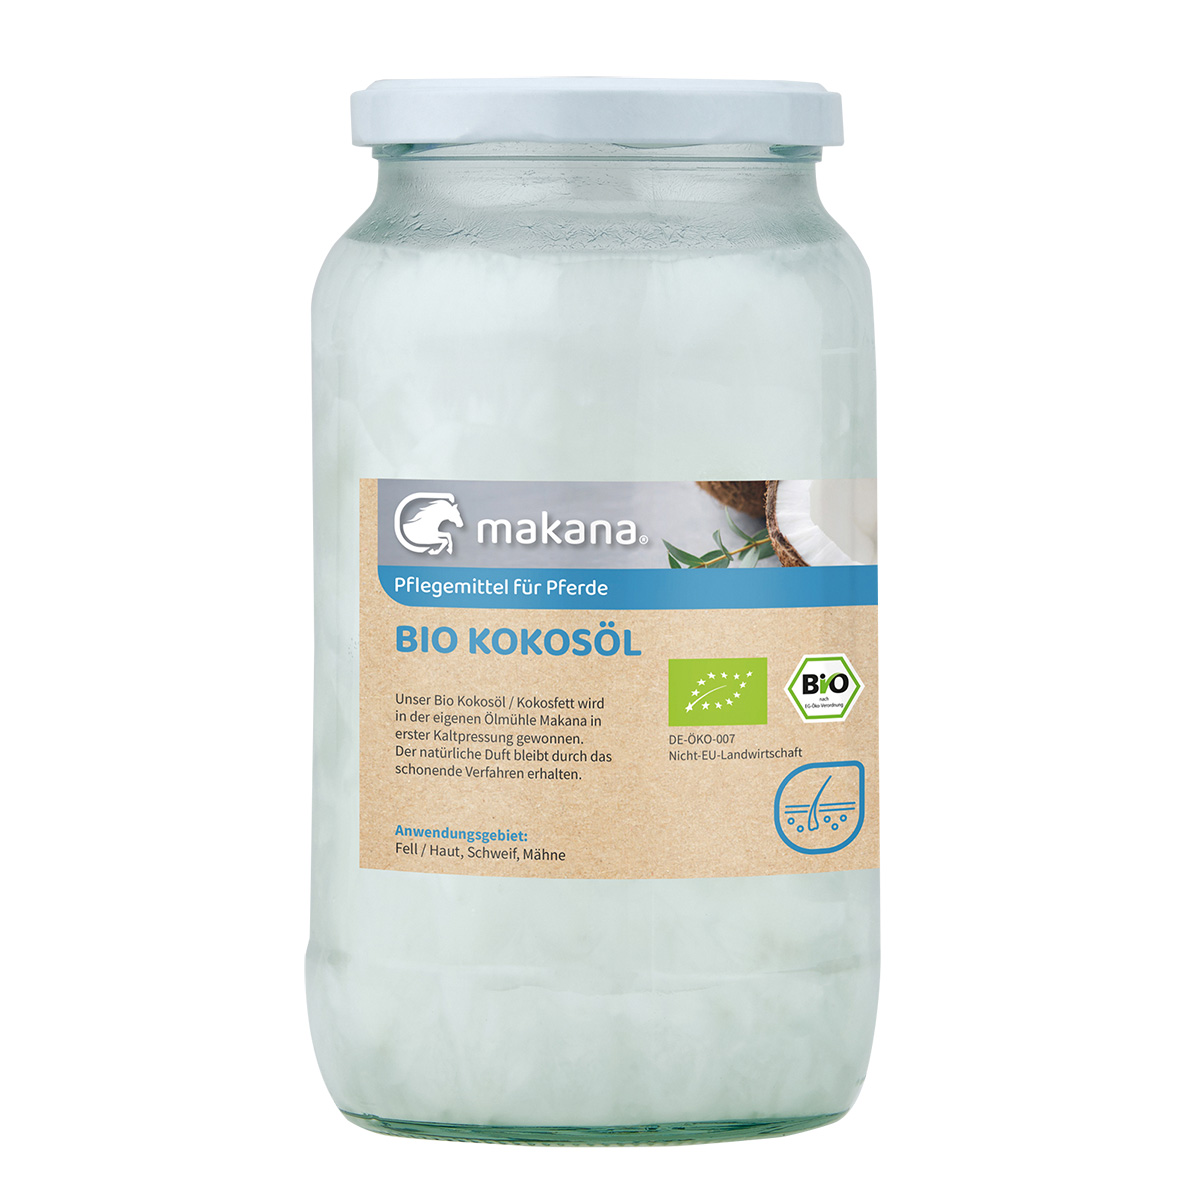 Makana BIO Kokosöl/ Kokosfett für Pferde, kaltgepresst, 900 ml Glas